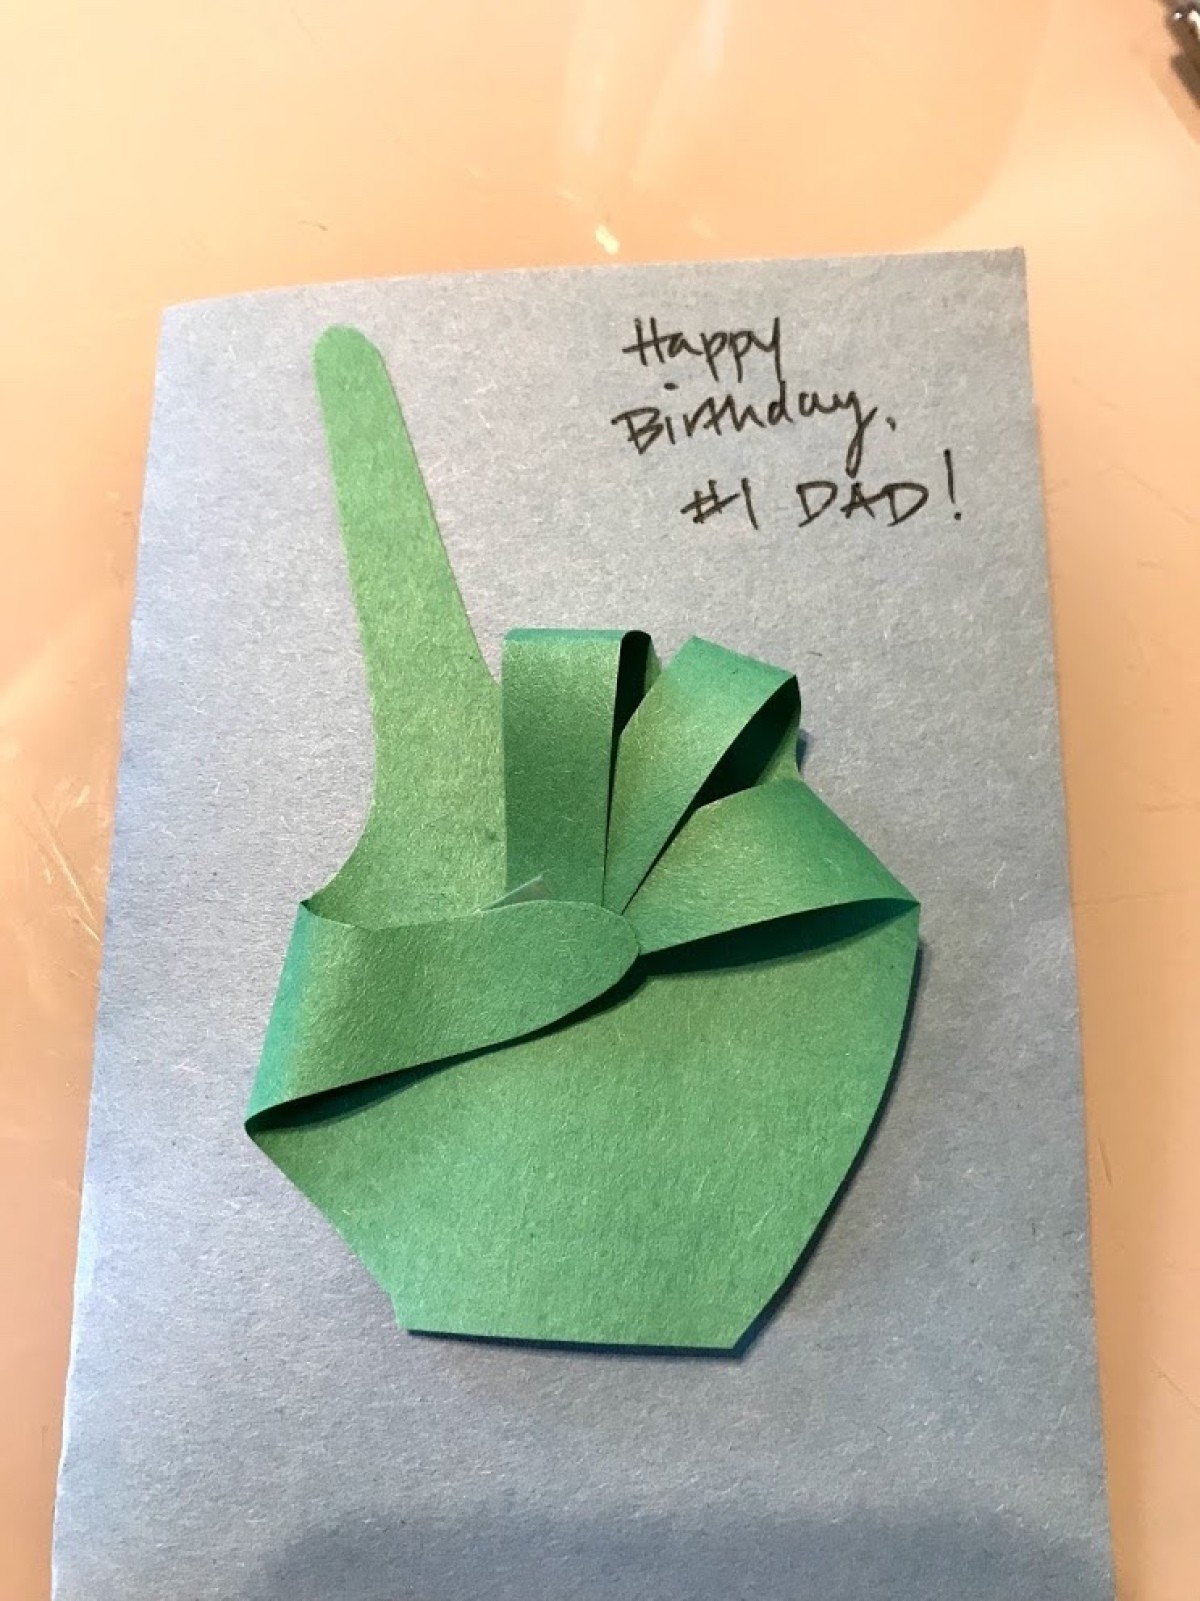 handmade birthday card designs for dad